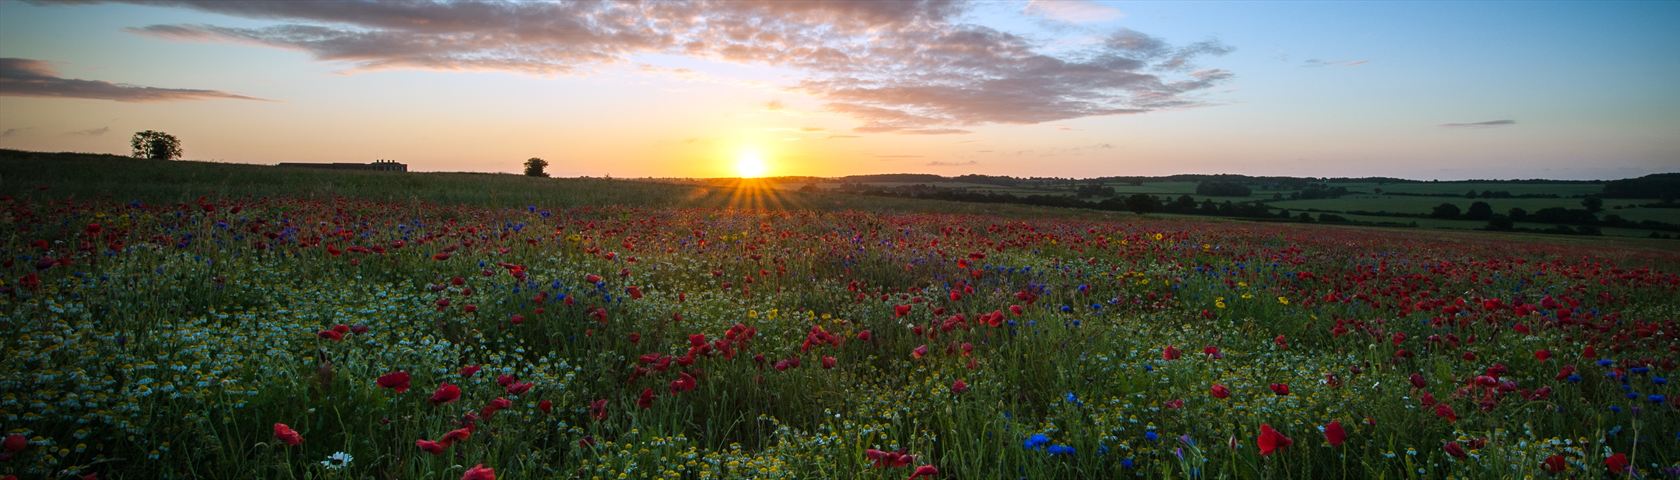 Sunrise Over a Poppy Field